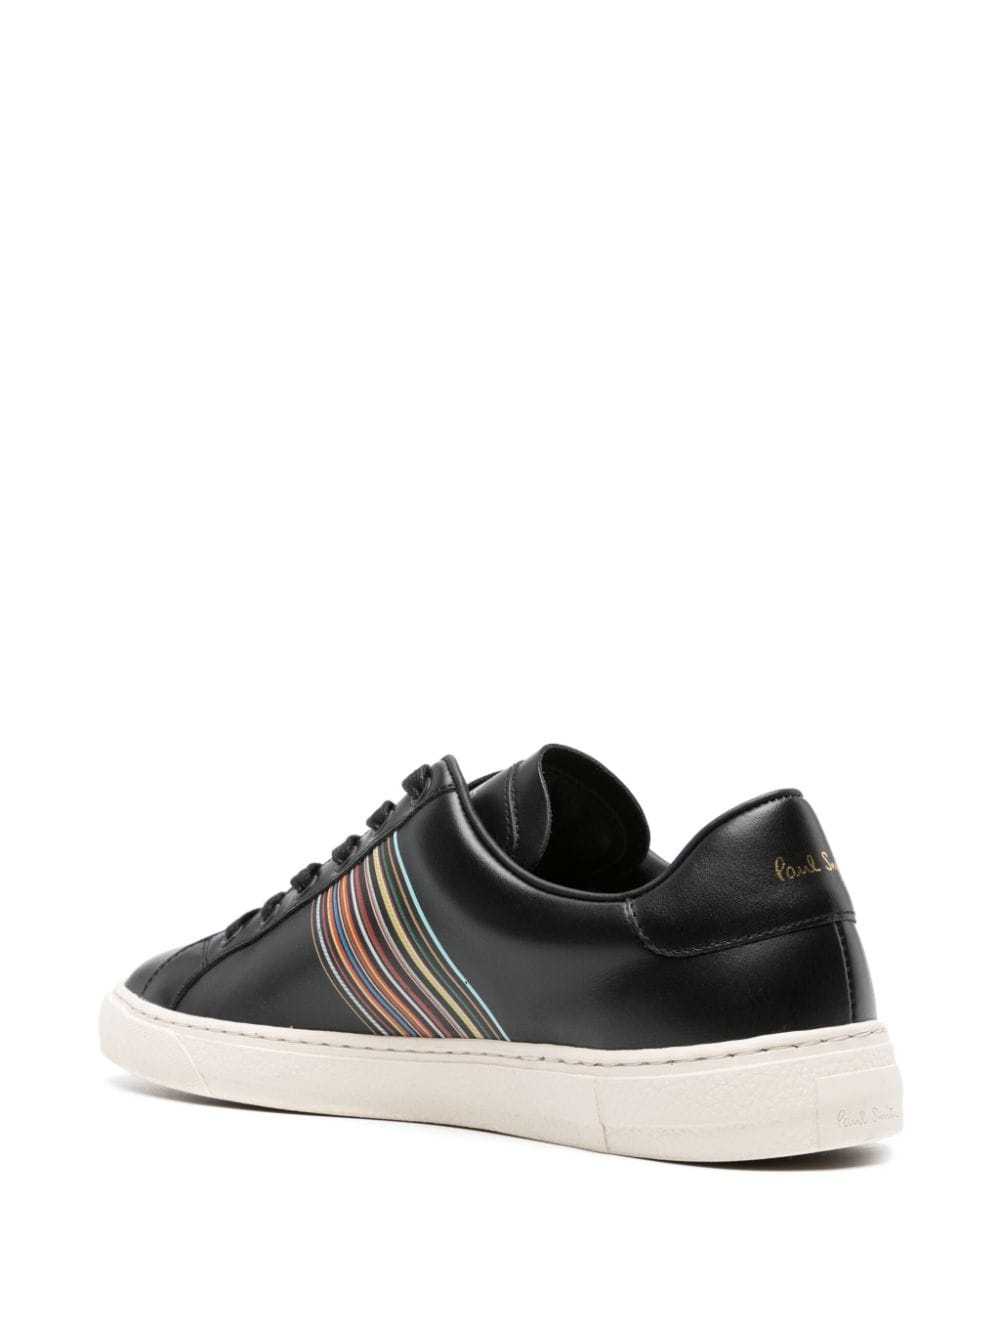 Hansen leather sneakers - 3